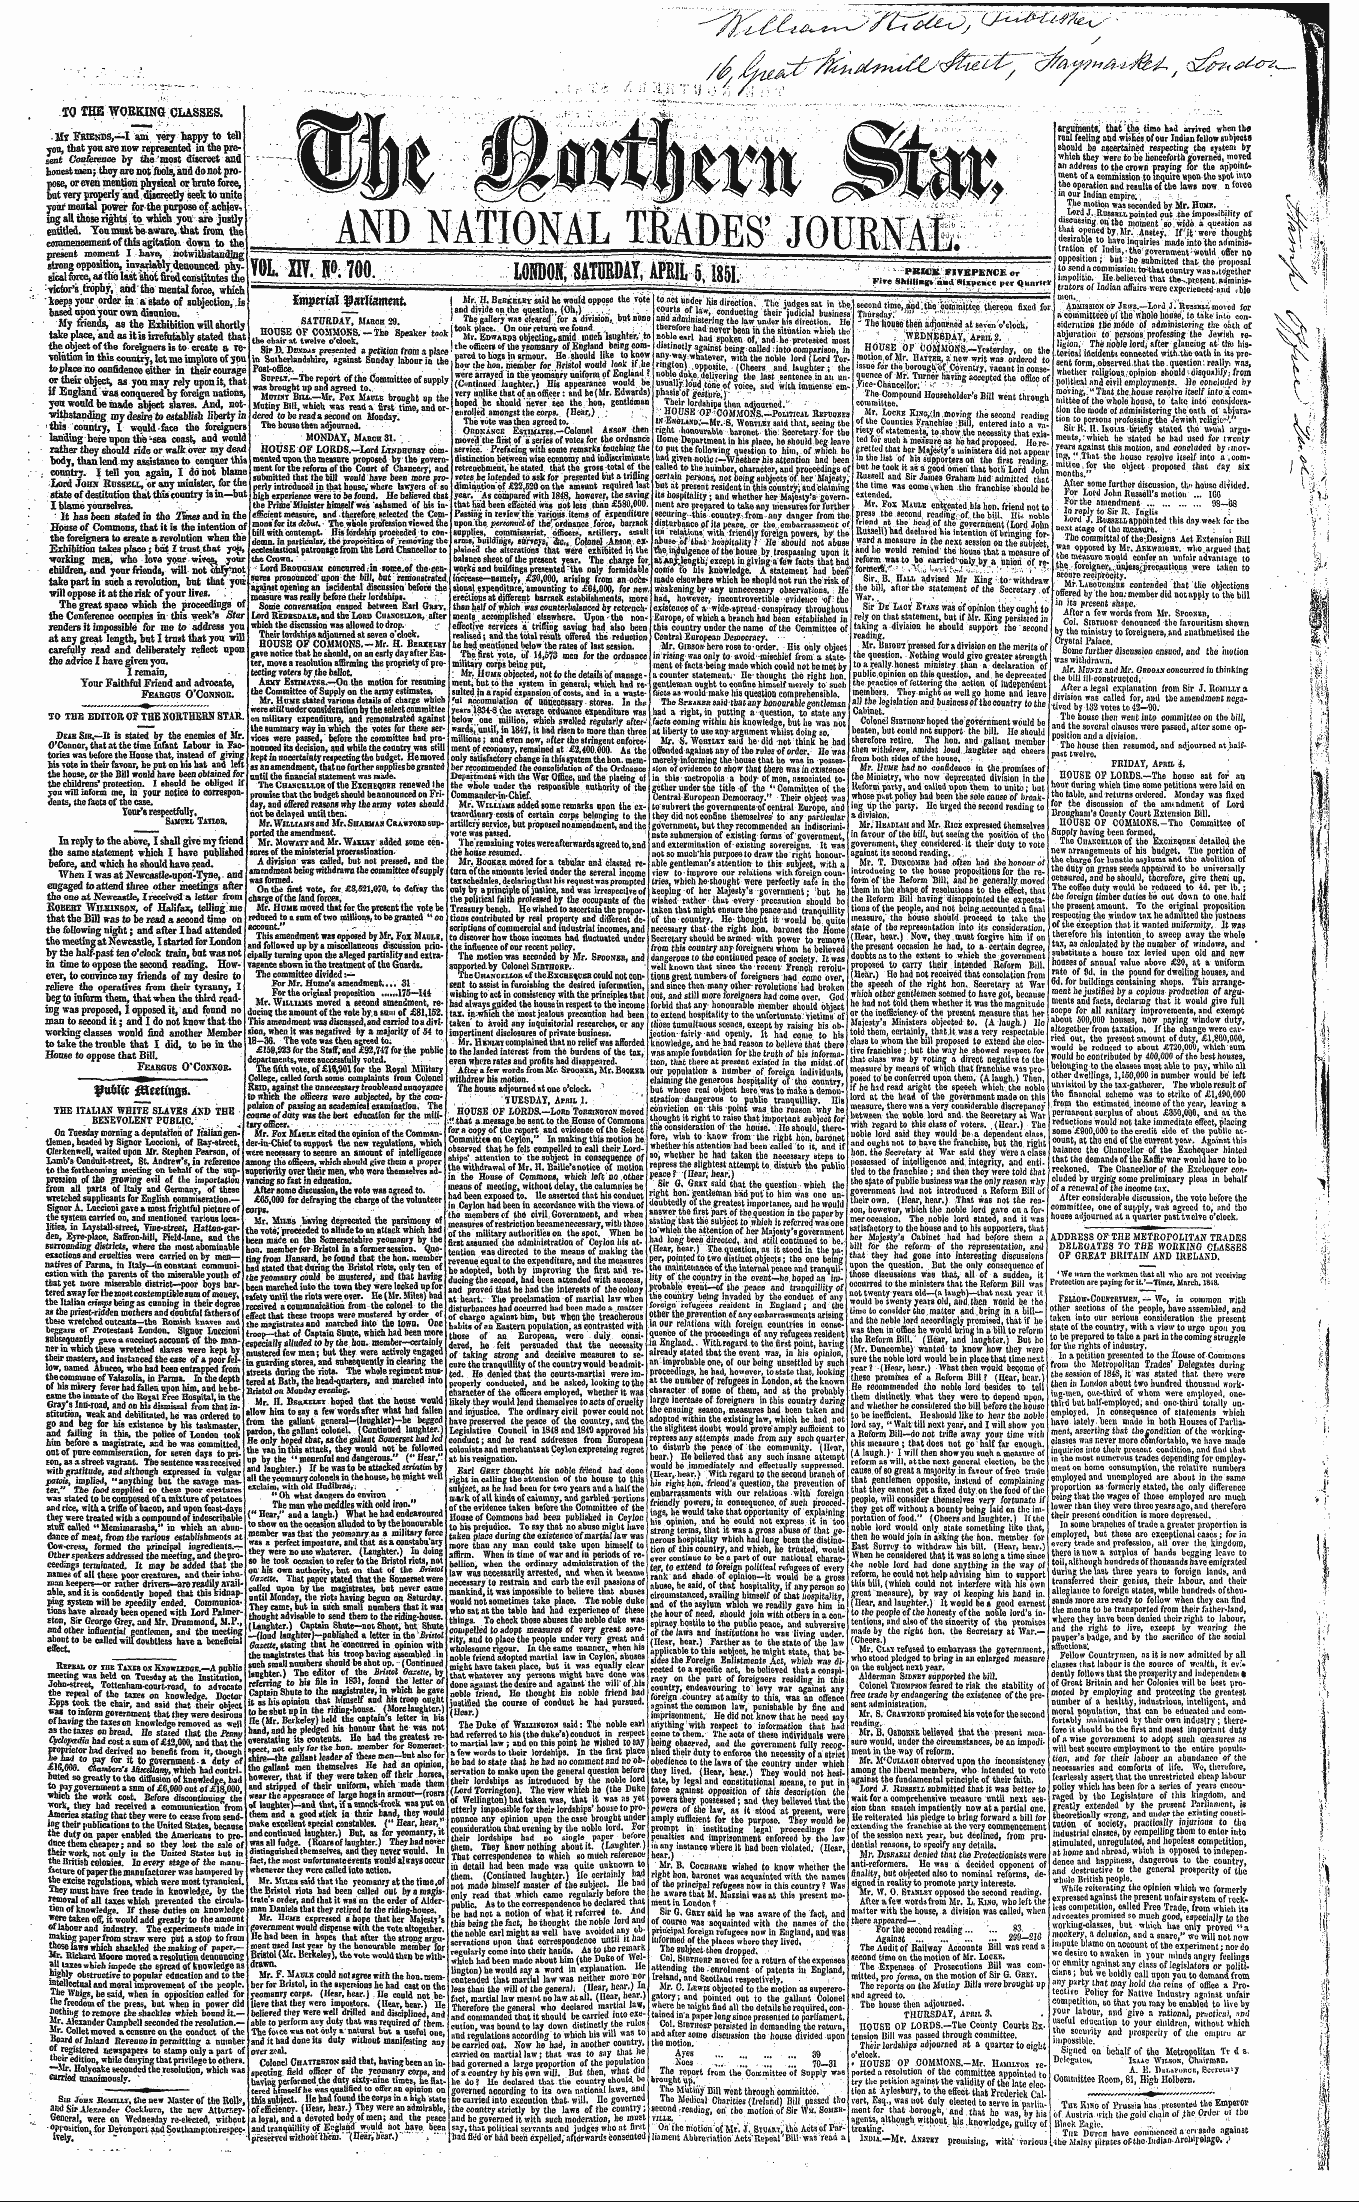 Northern Star (1837-1852): jS F Y, 2nd edition - 31 V N ? V] ' V' \ F \ ;S I V- 1 / Iv; ¦...